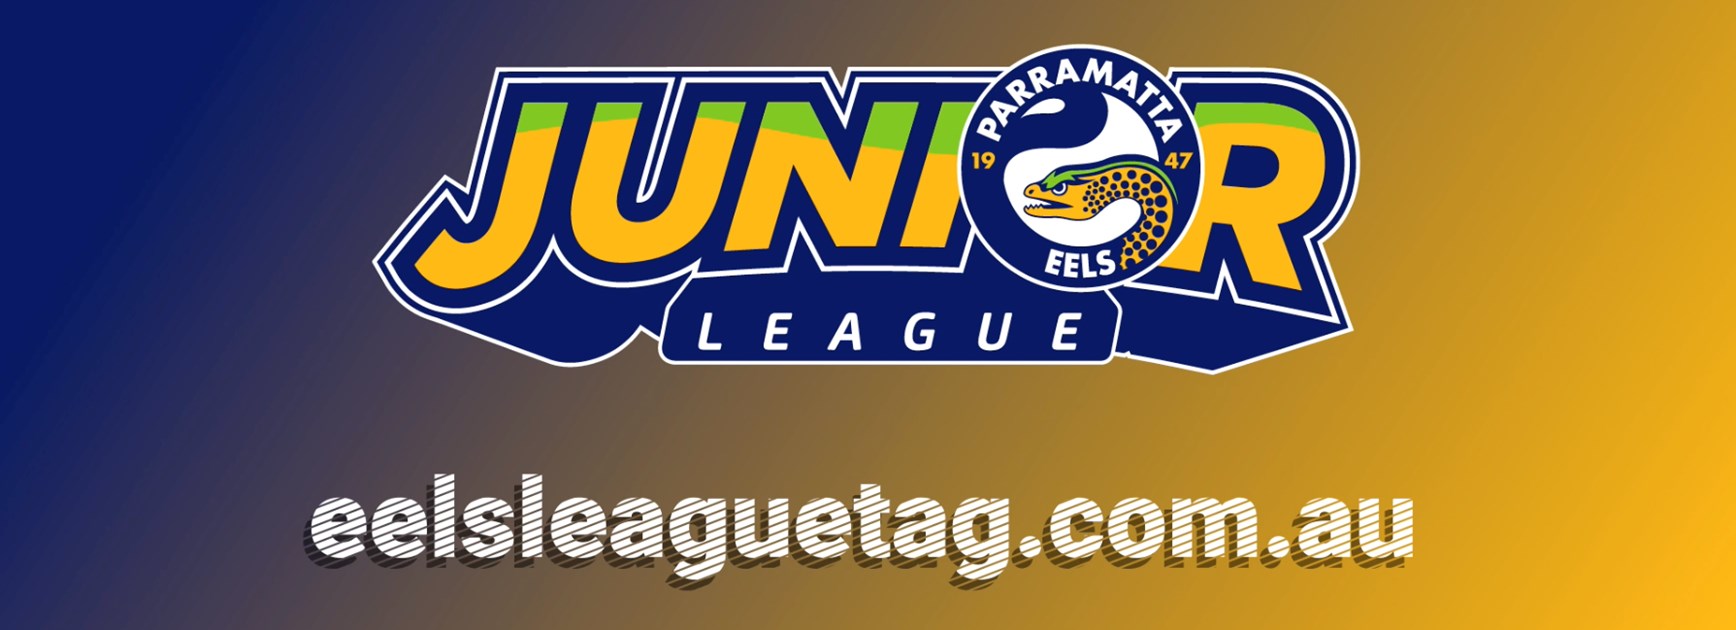 Parramatta Junior League introduce League Tag